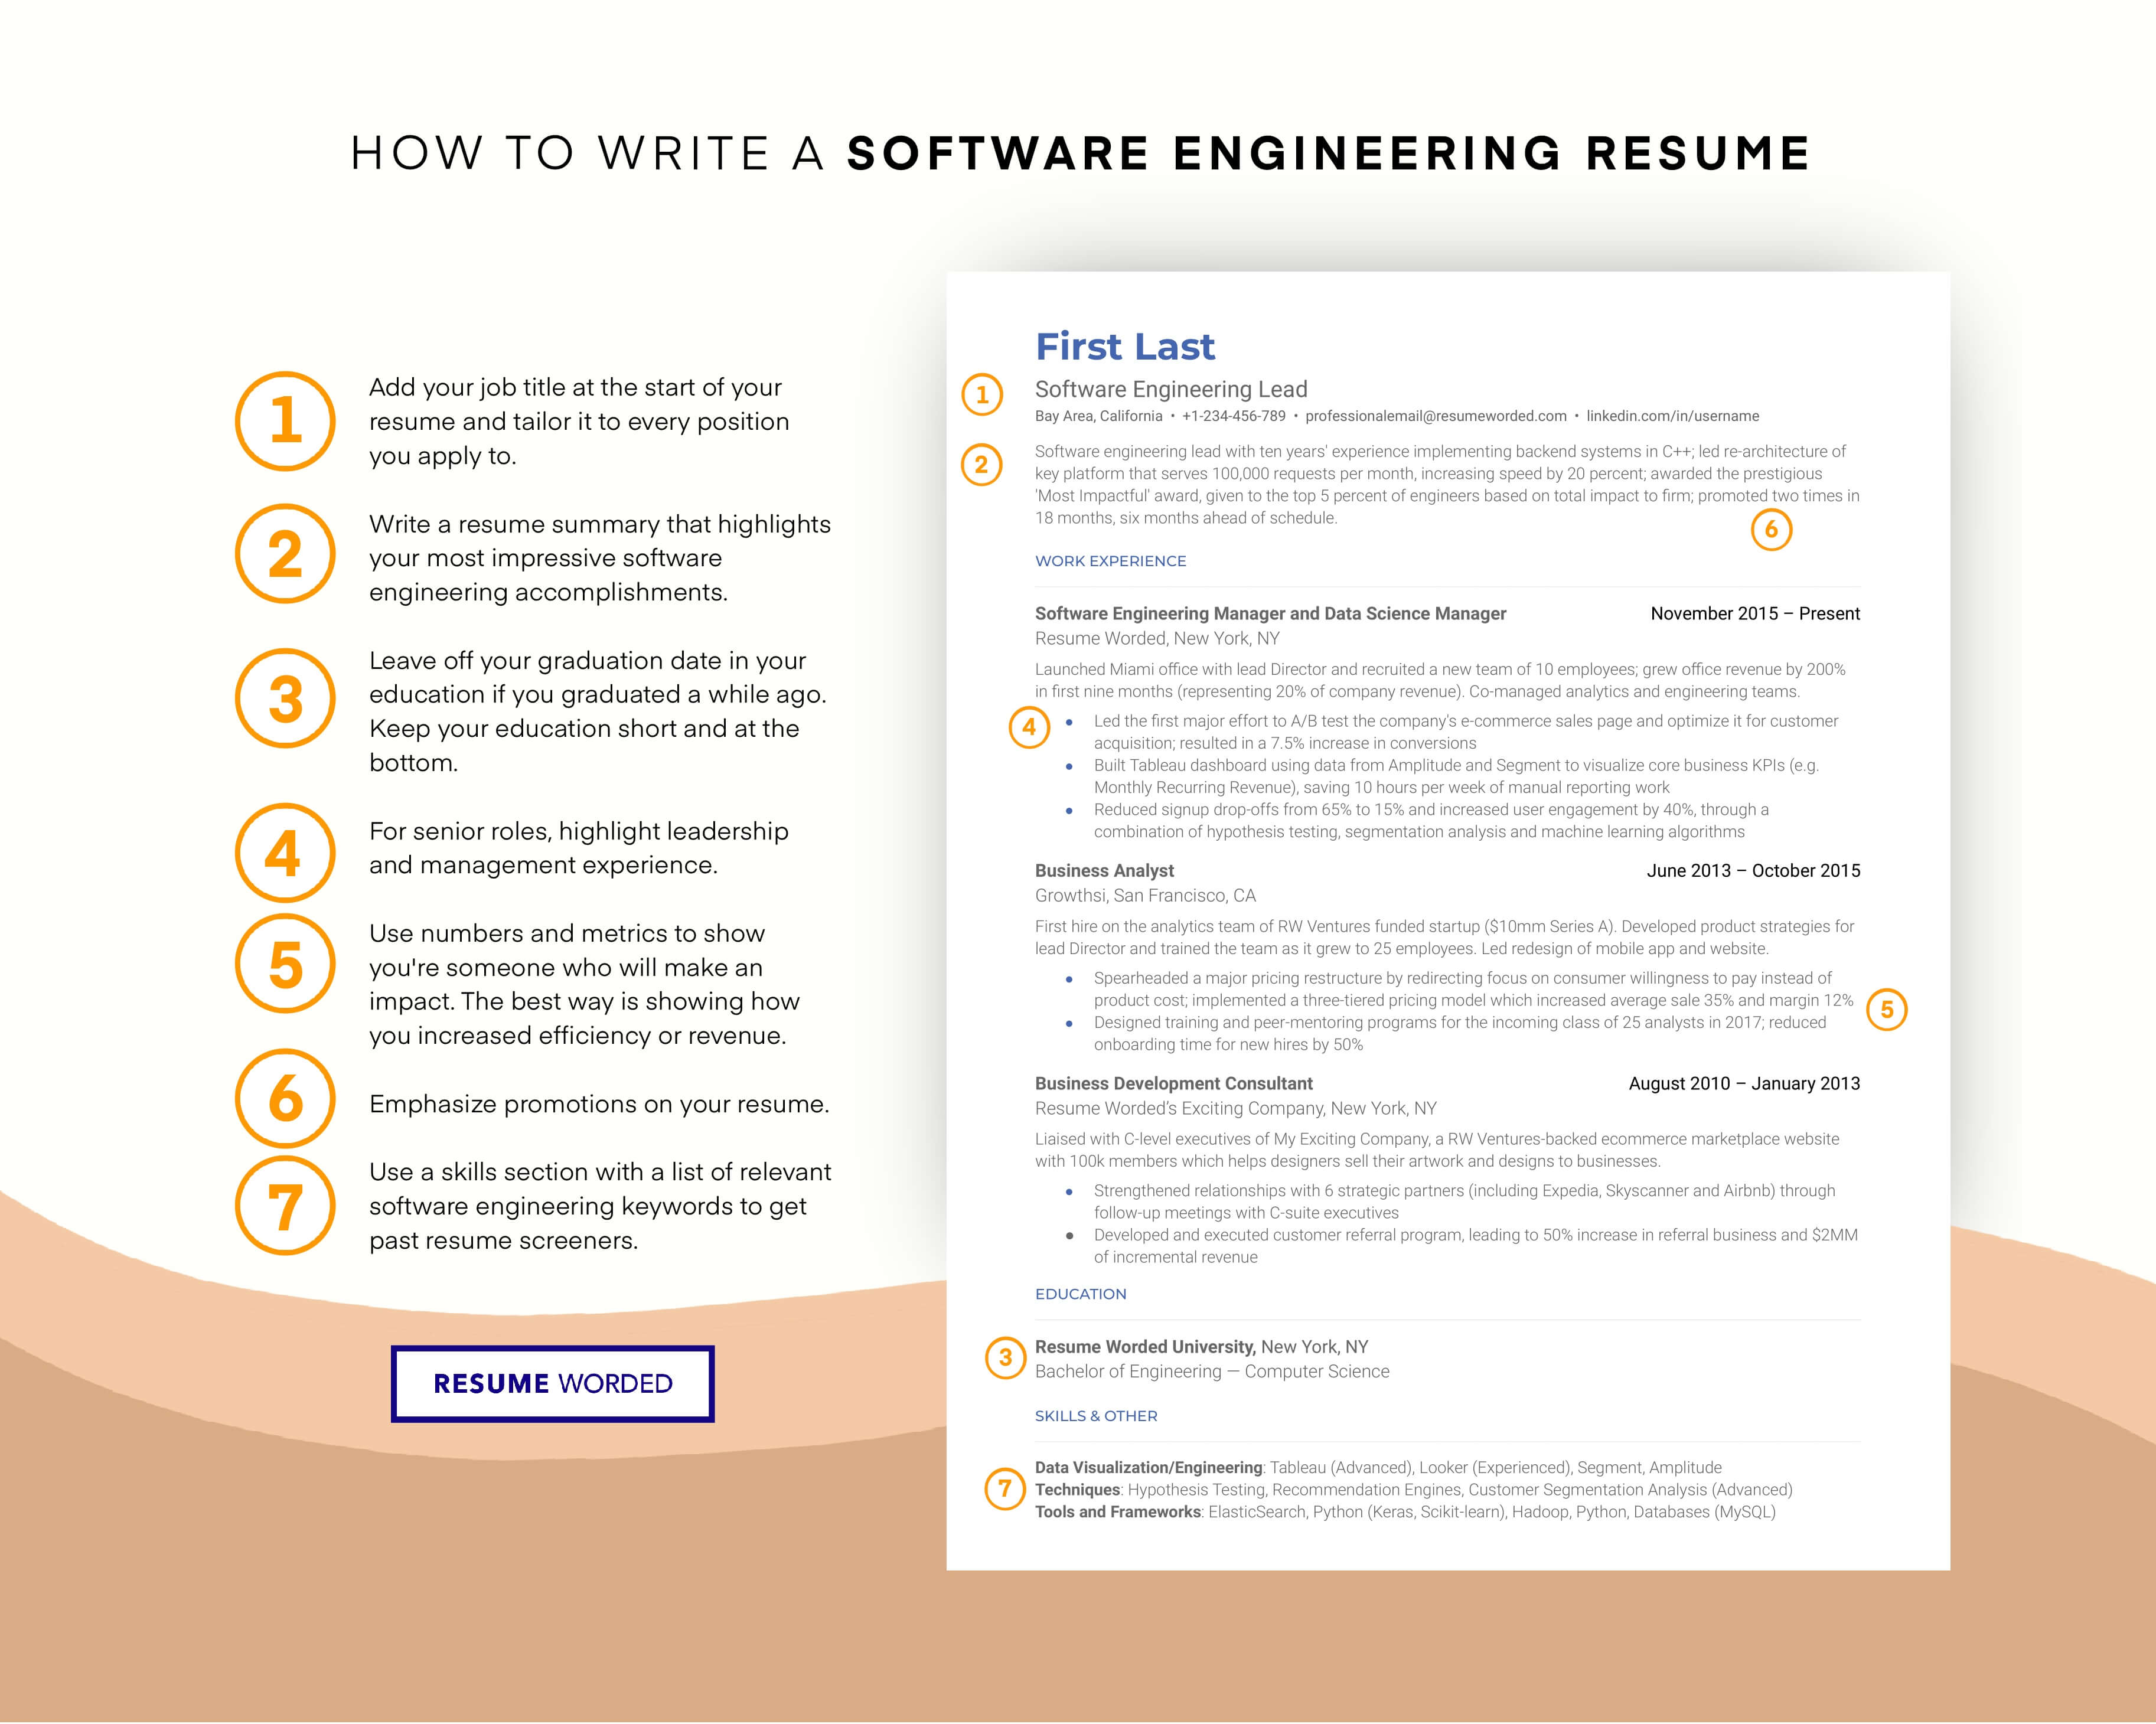 Include relevant software skills - Civil Engineer CV